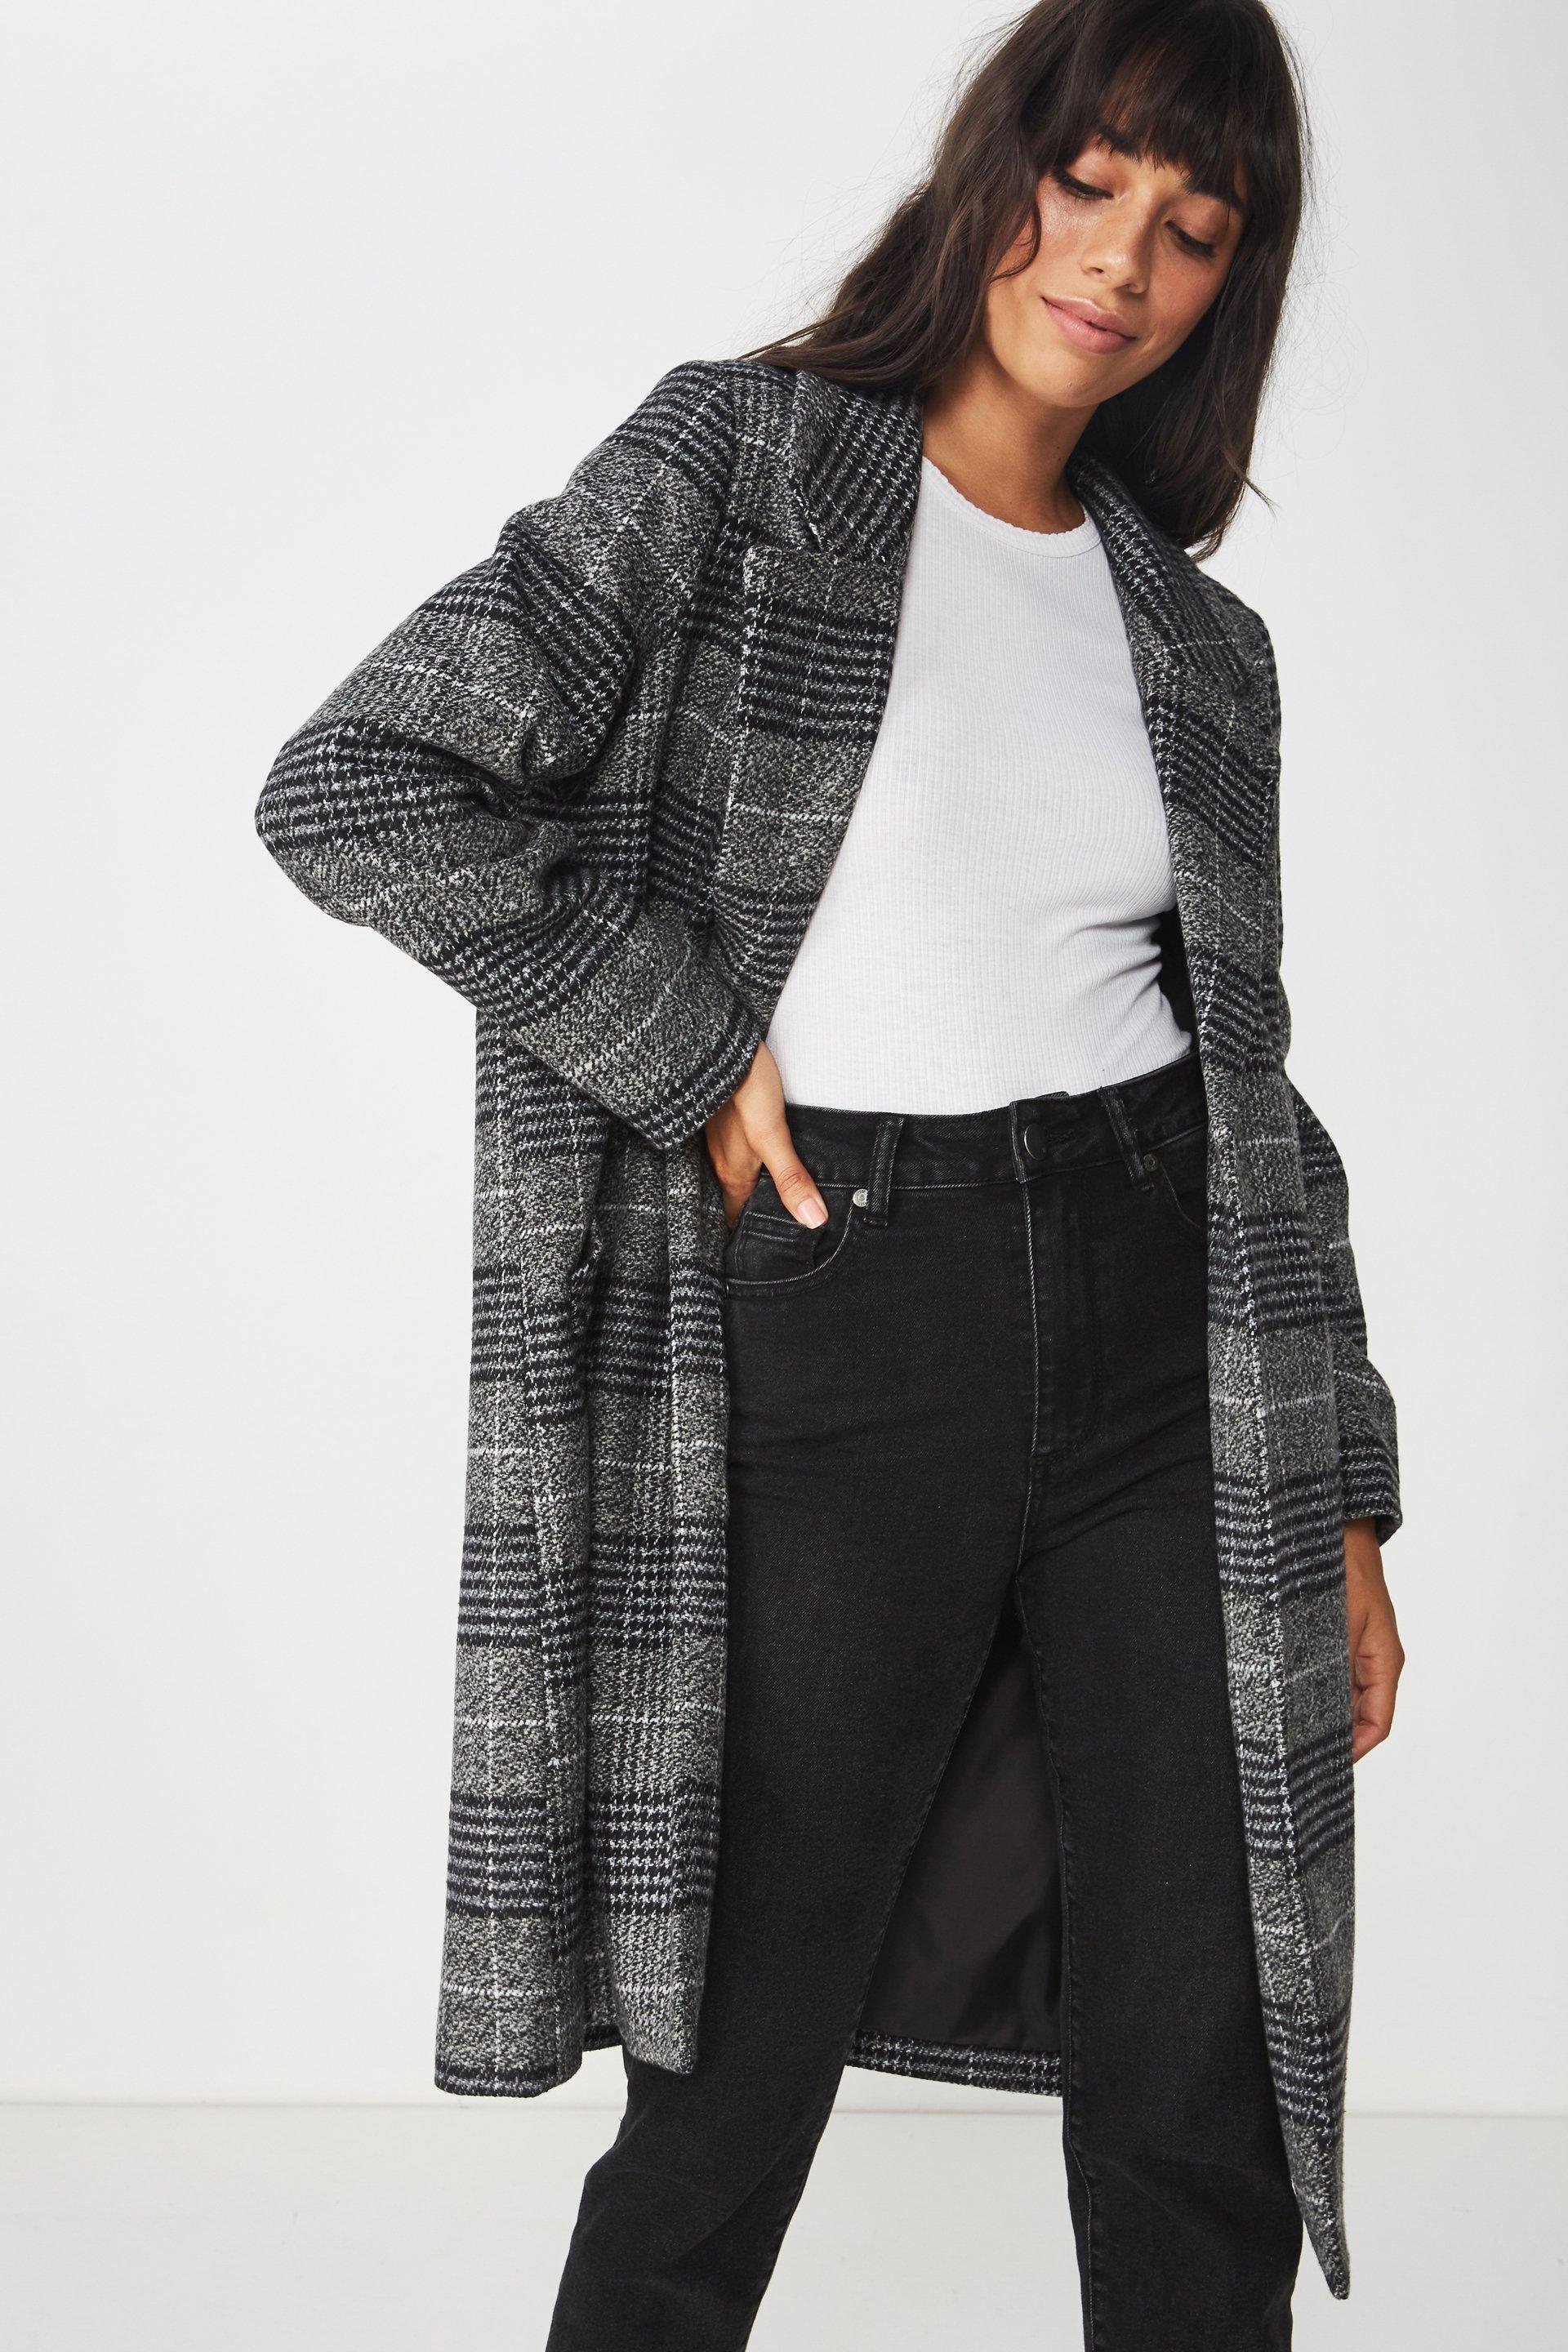 New mid-length coat - black check Cotton On Coats | Superbalist.com